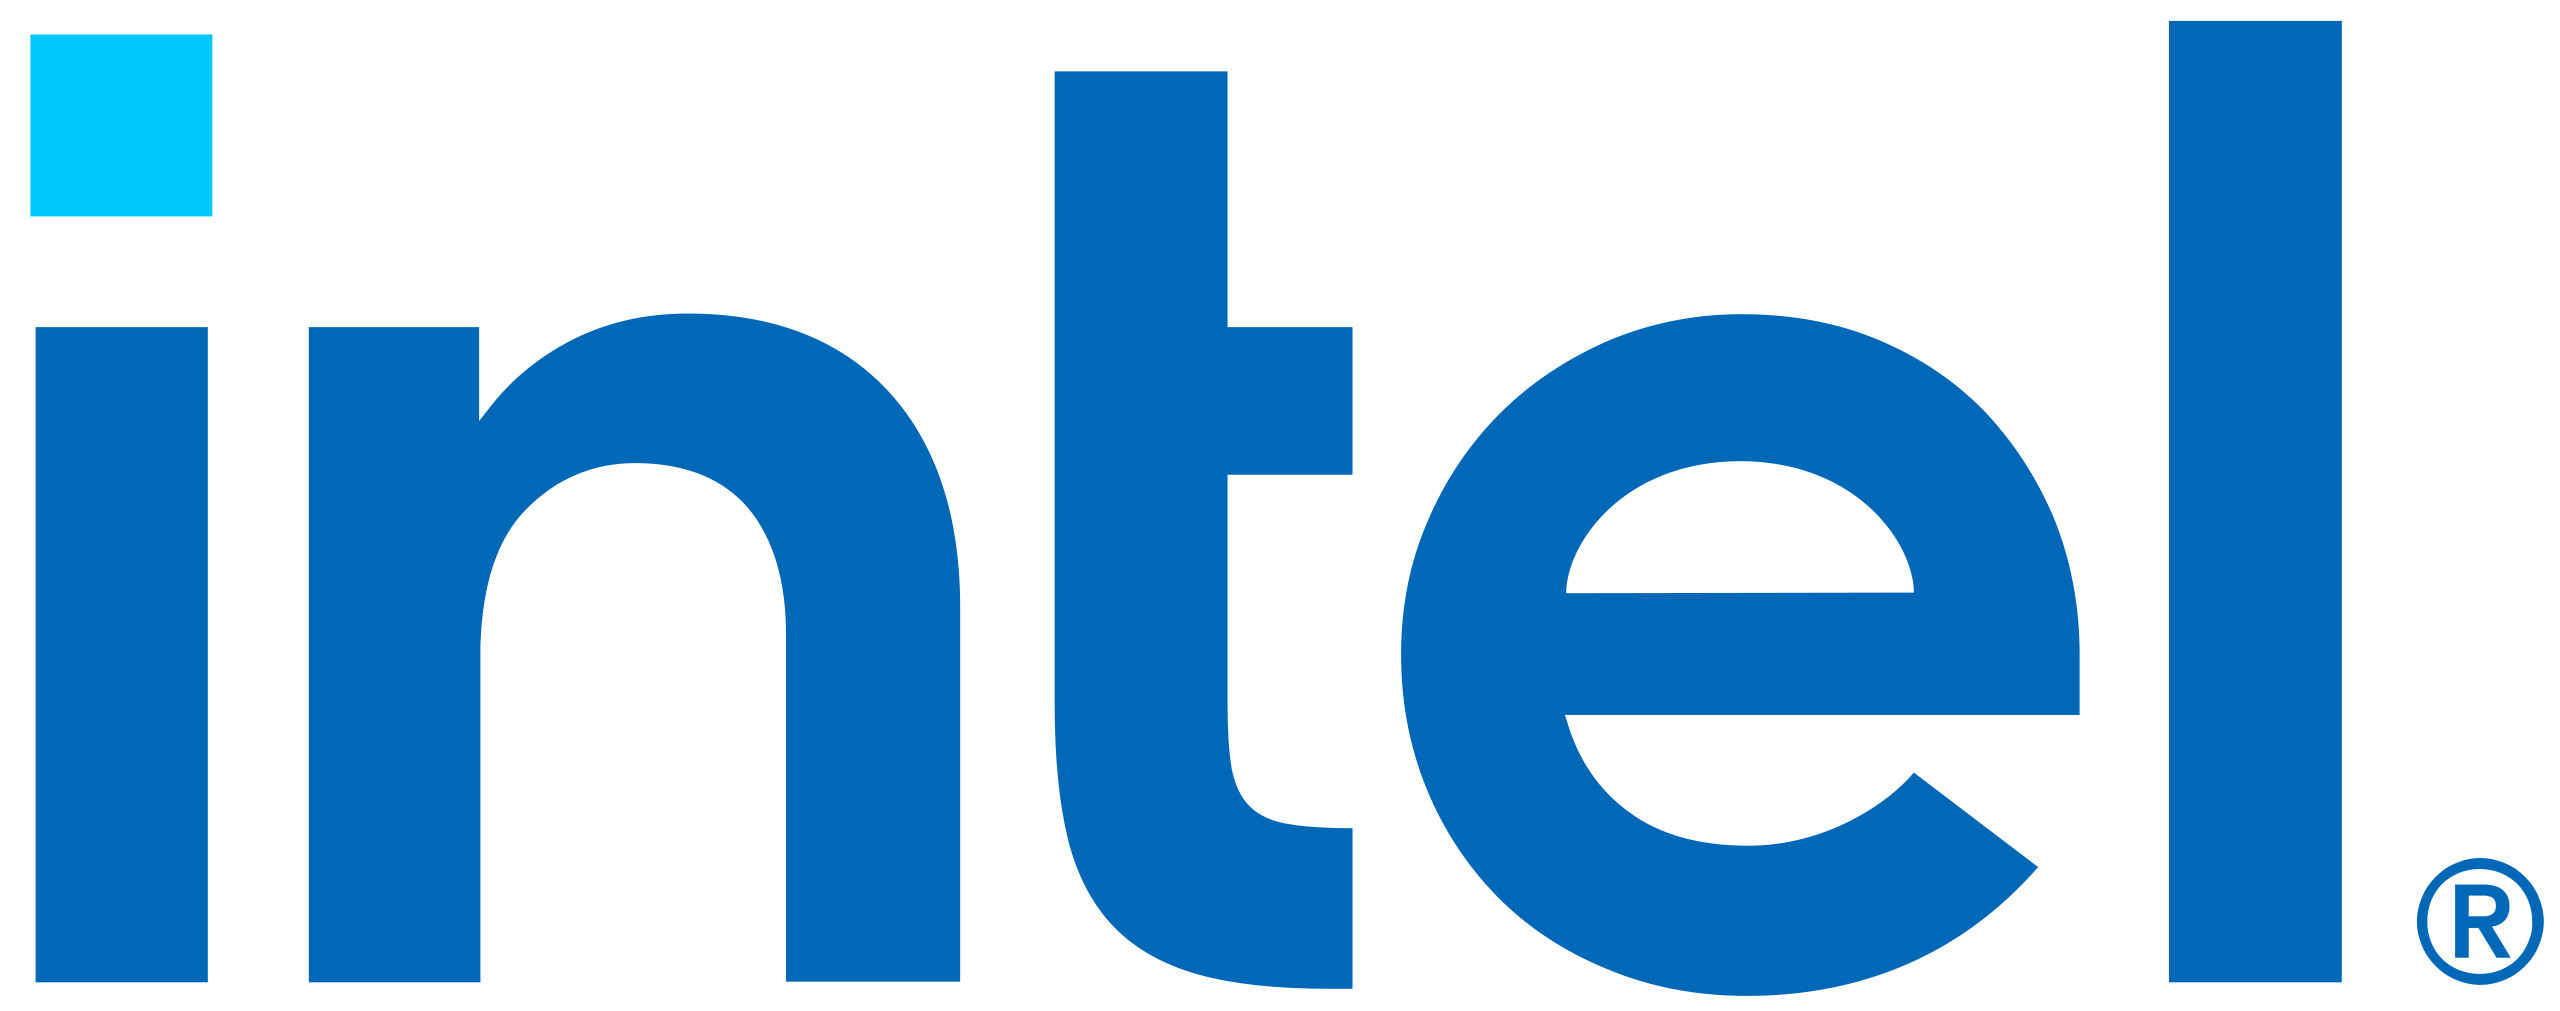 Intel’s logo